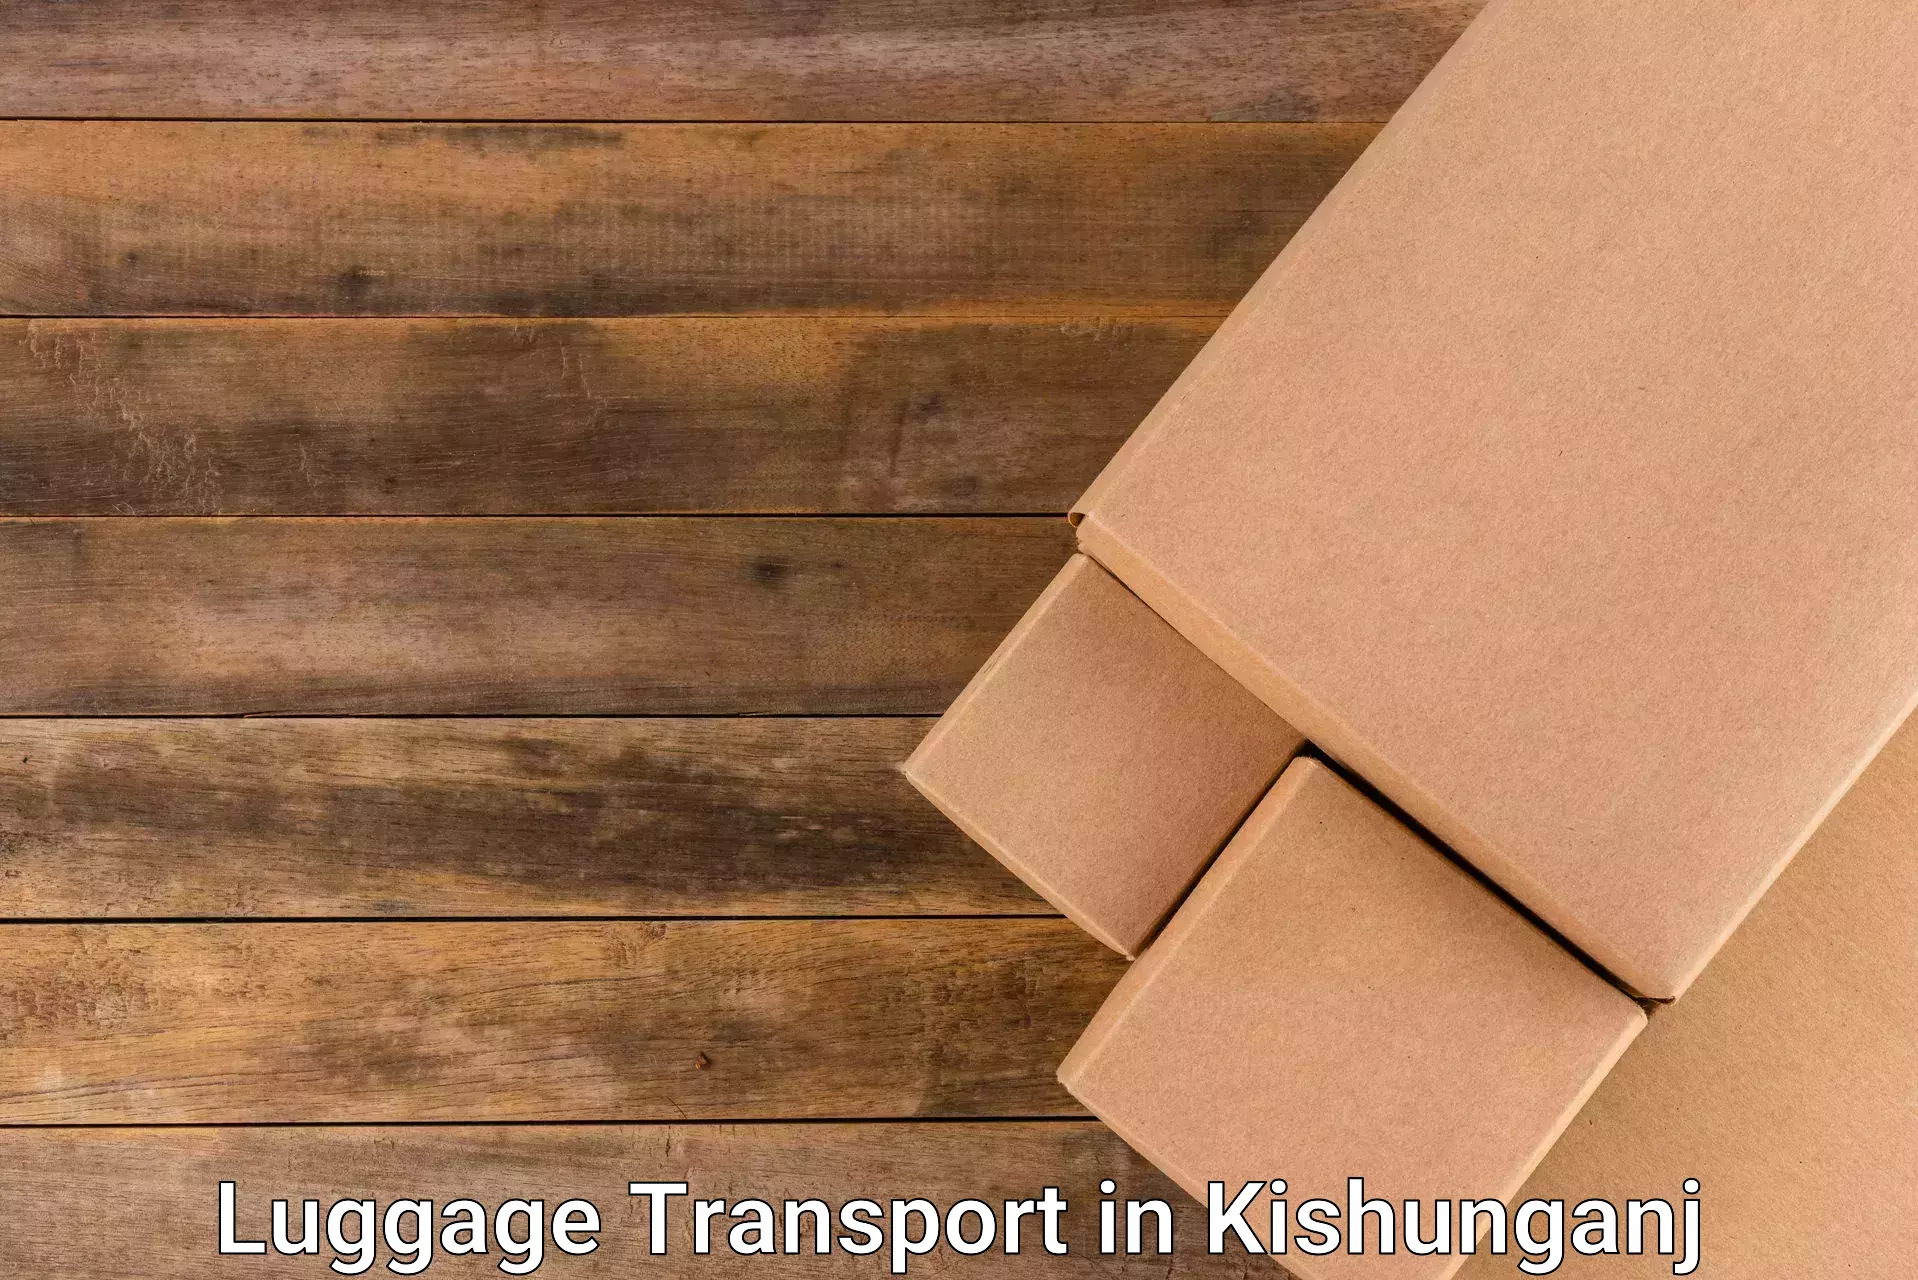 Luggage transport consultancy in Kishunganj